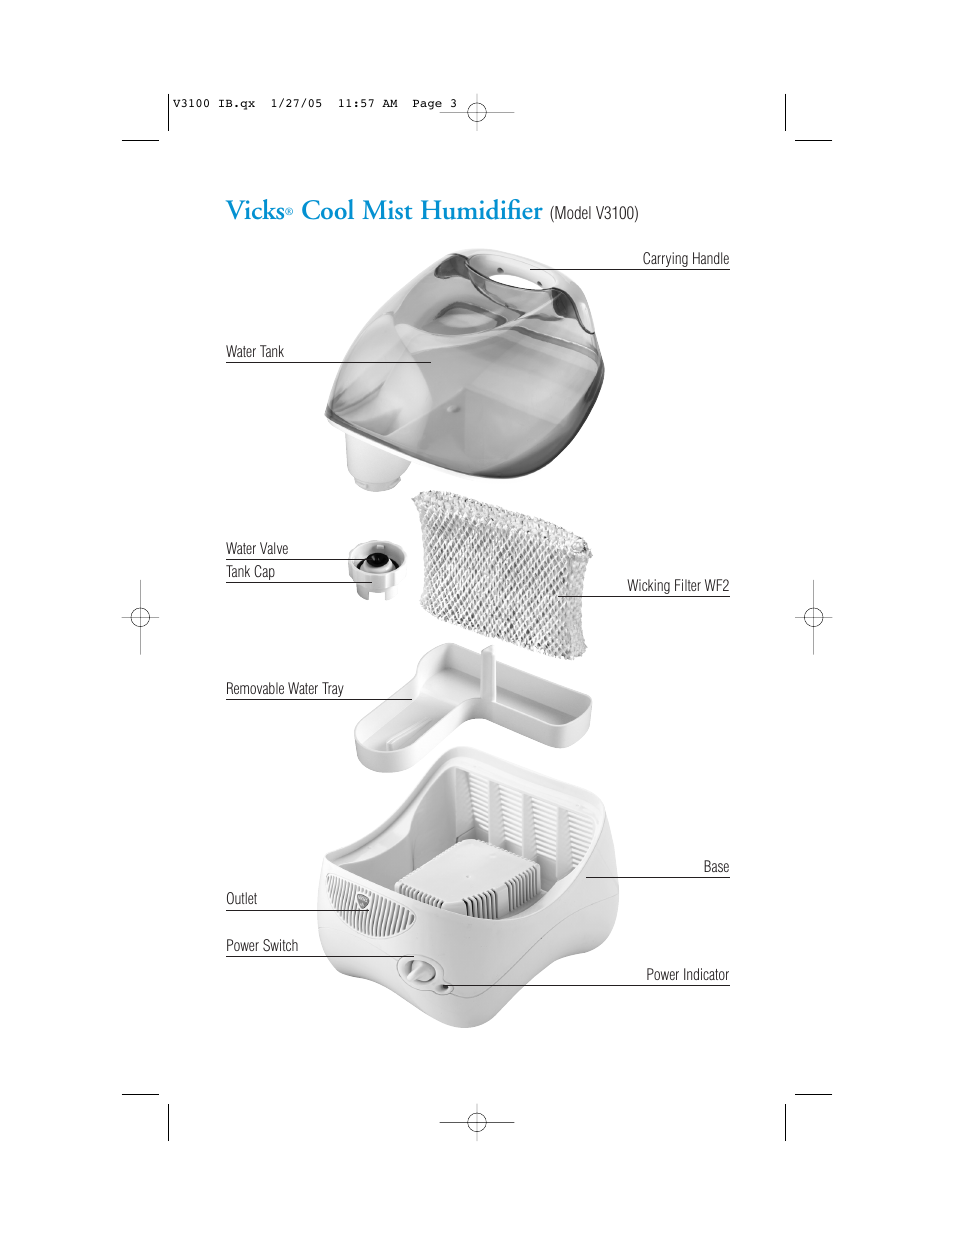 Vicks, Cool mist humidifier | Vicks Cool Mist Humidifier V3100 User